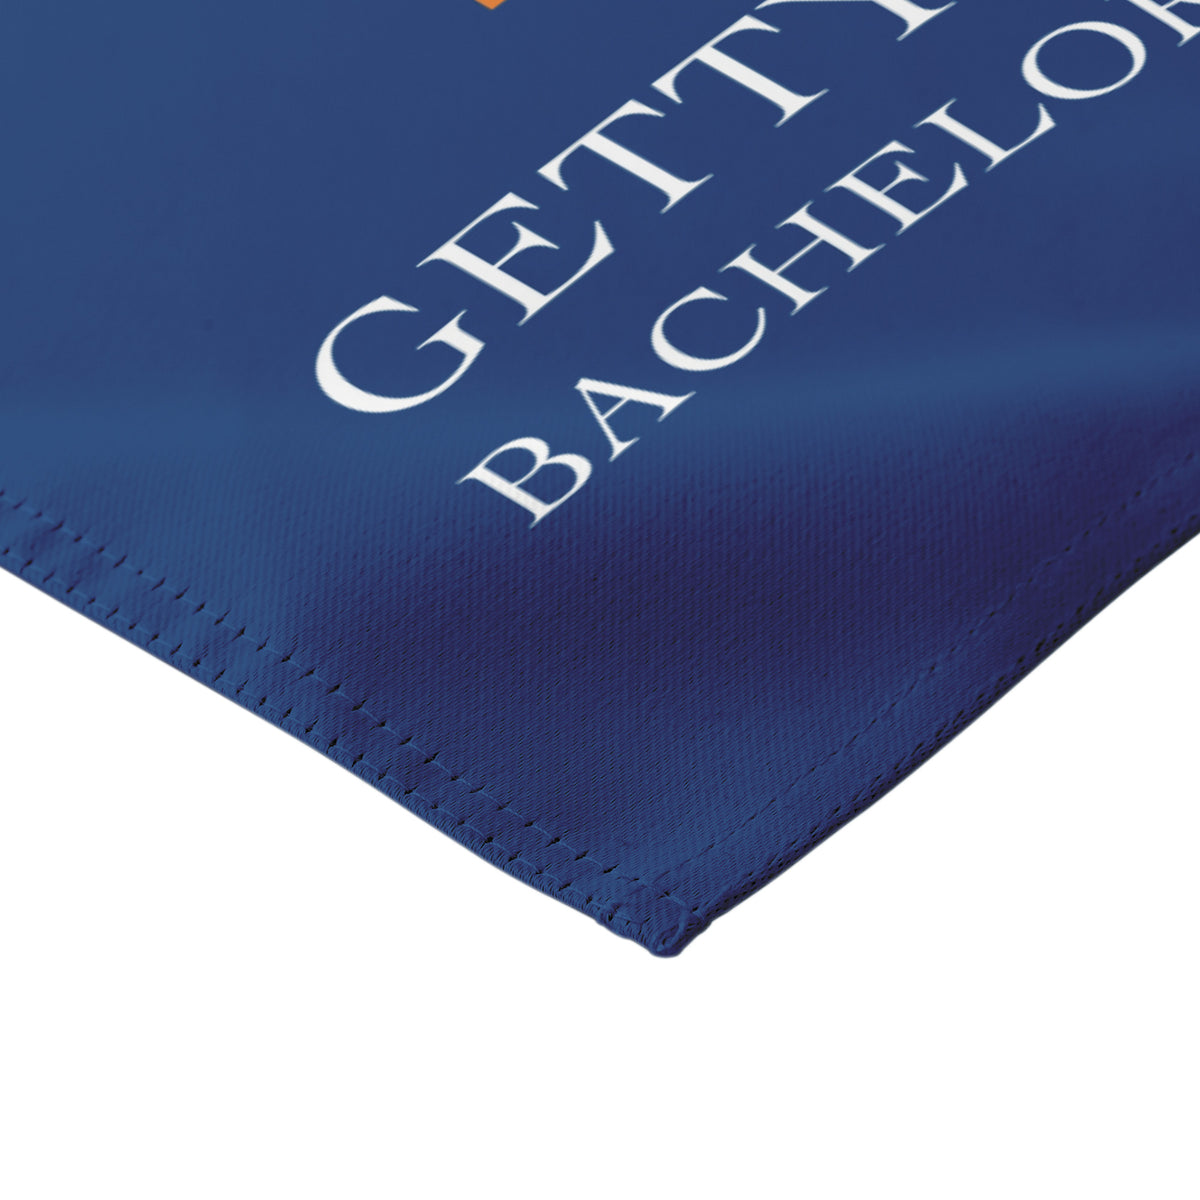 bachelors degree-blue